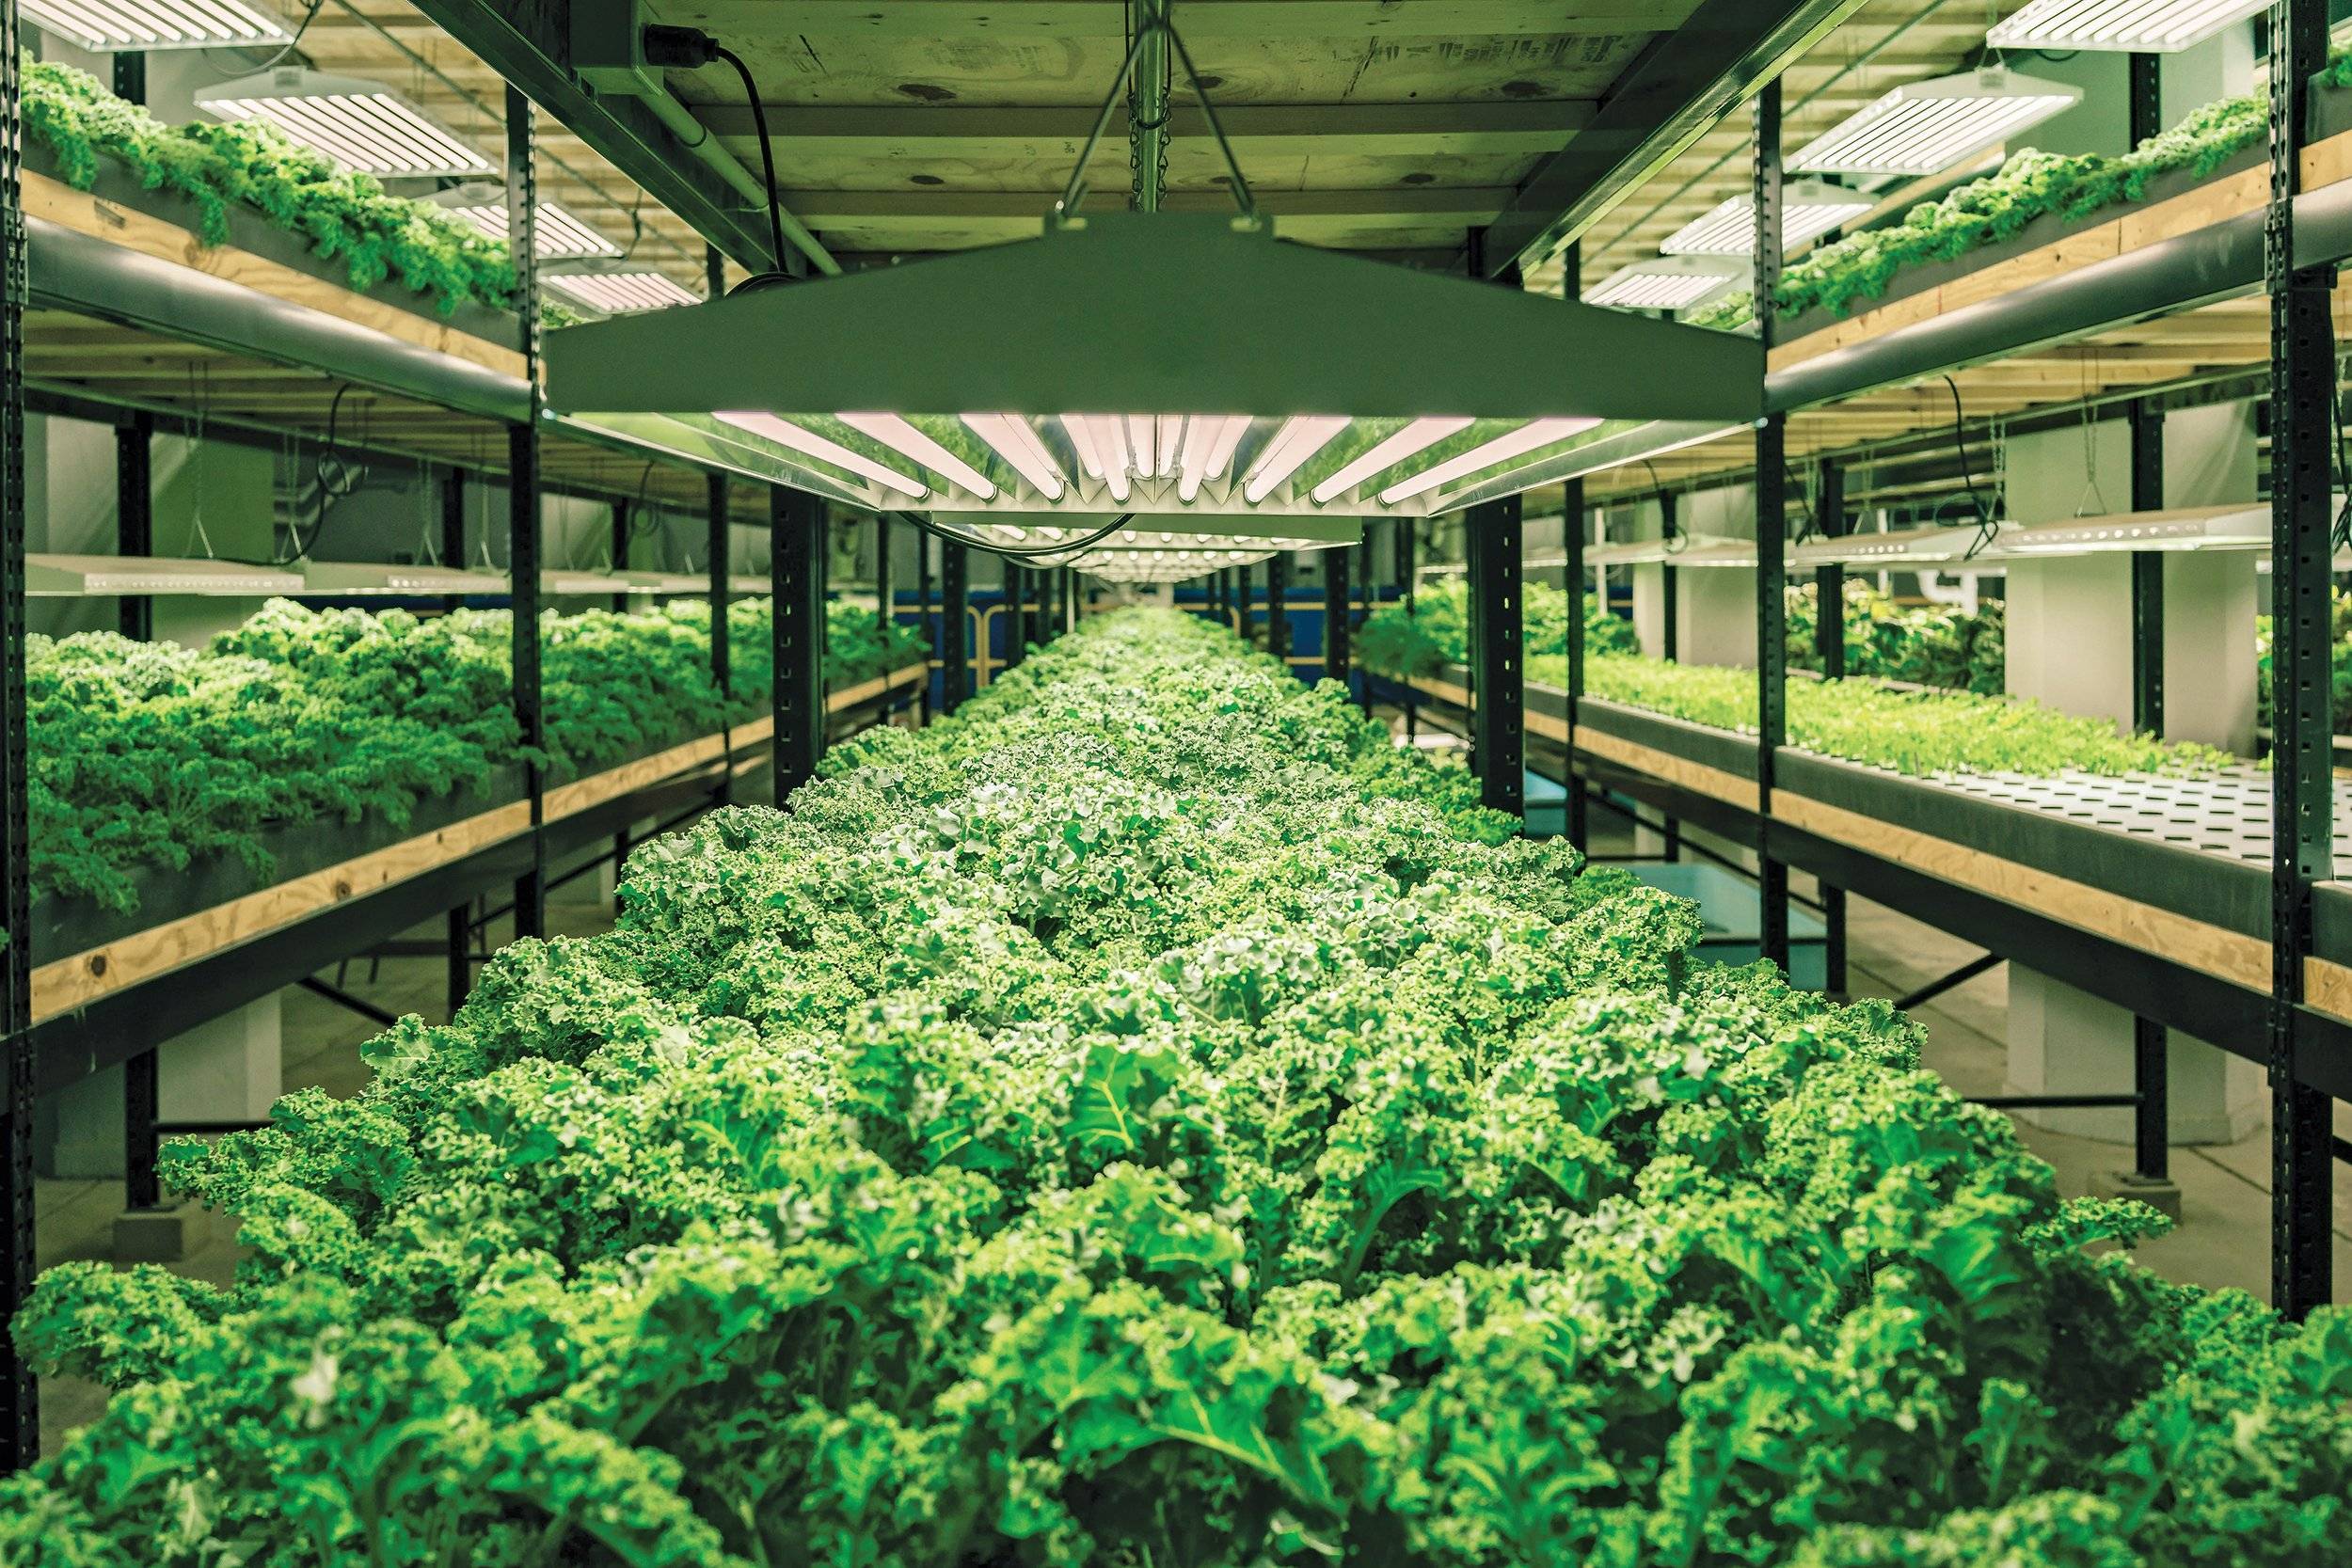 Выращивание зелени в теплице как бизнес в домашних условиях: на продажу, бизнес-план, реализация